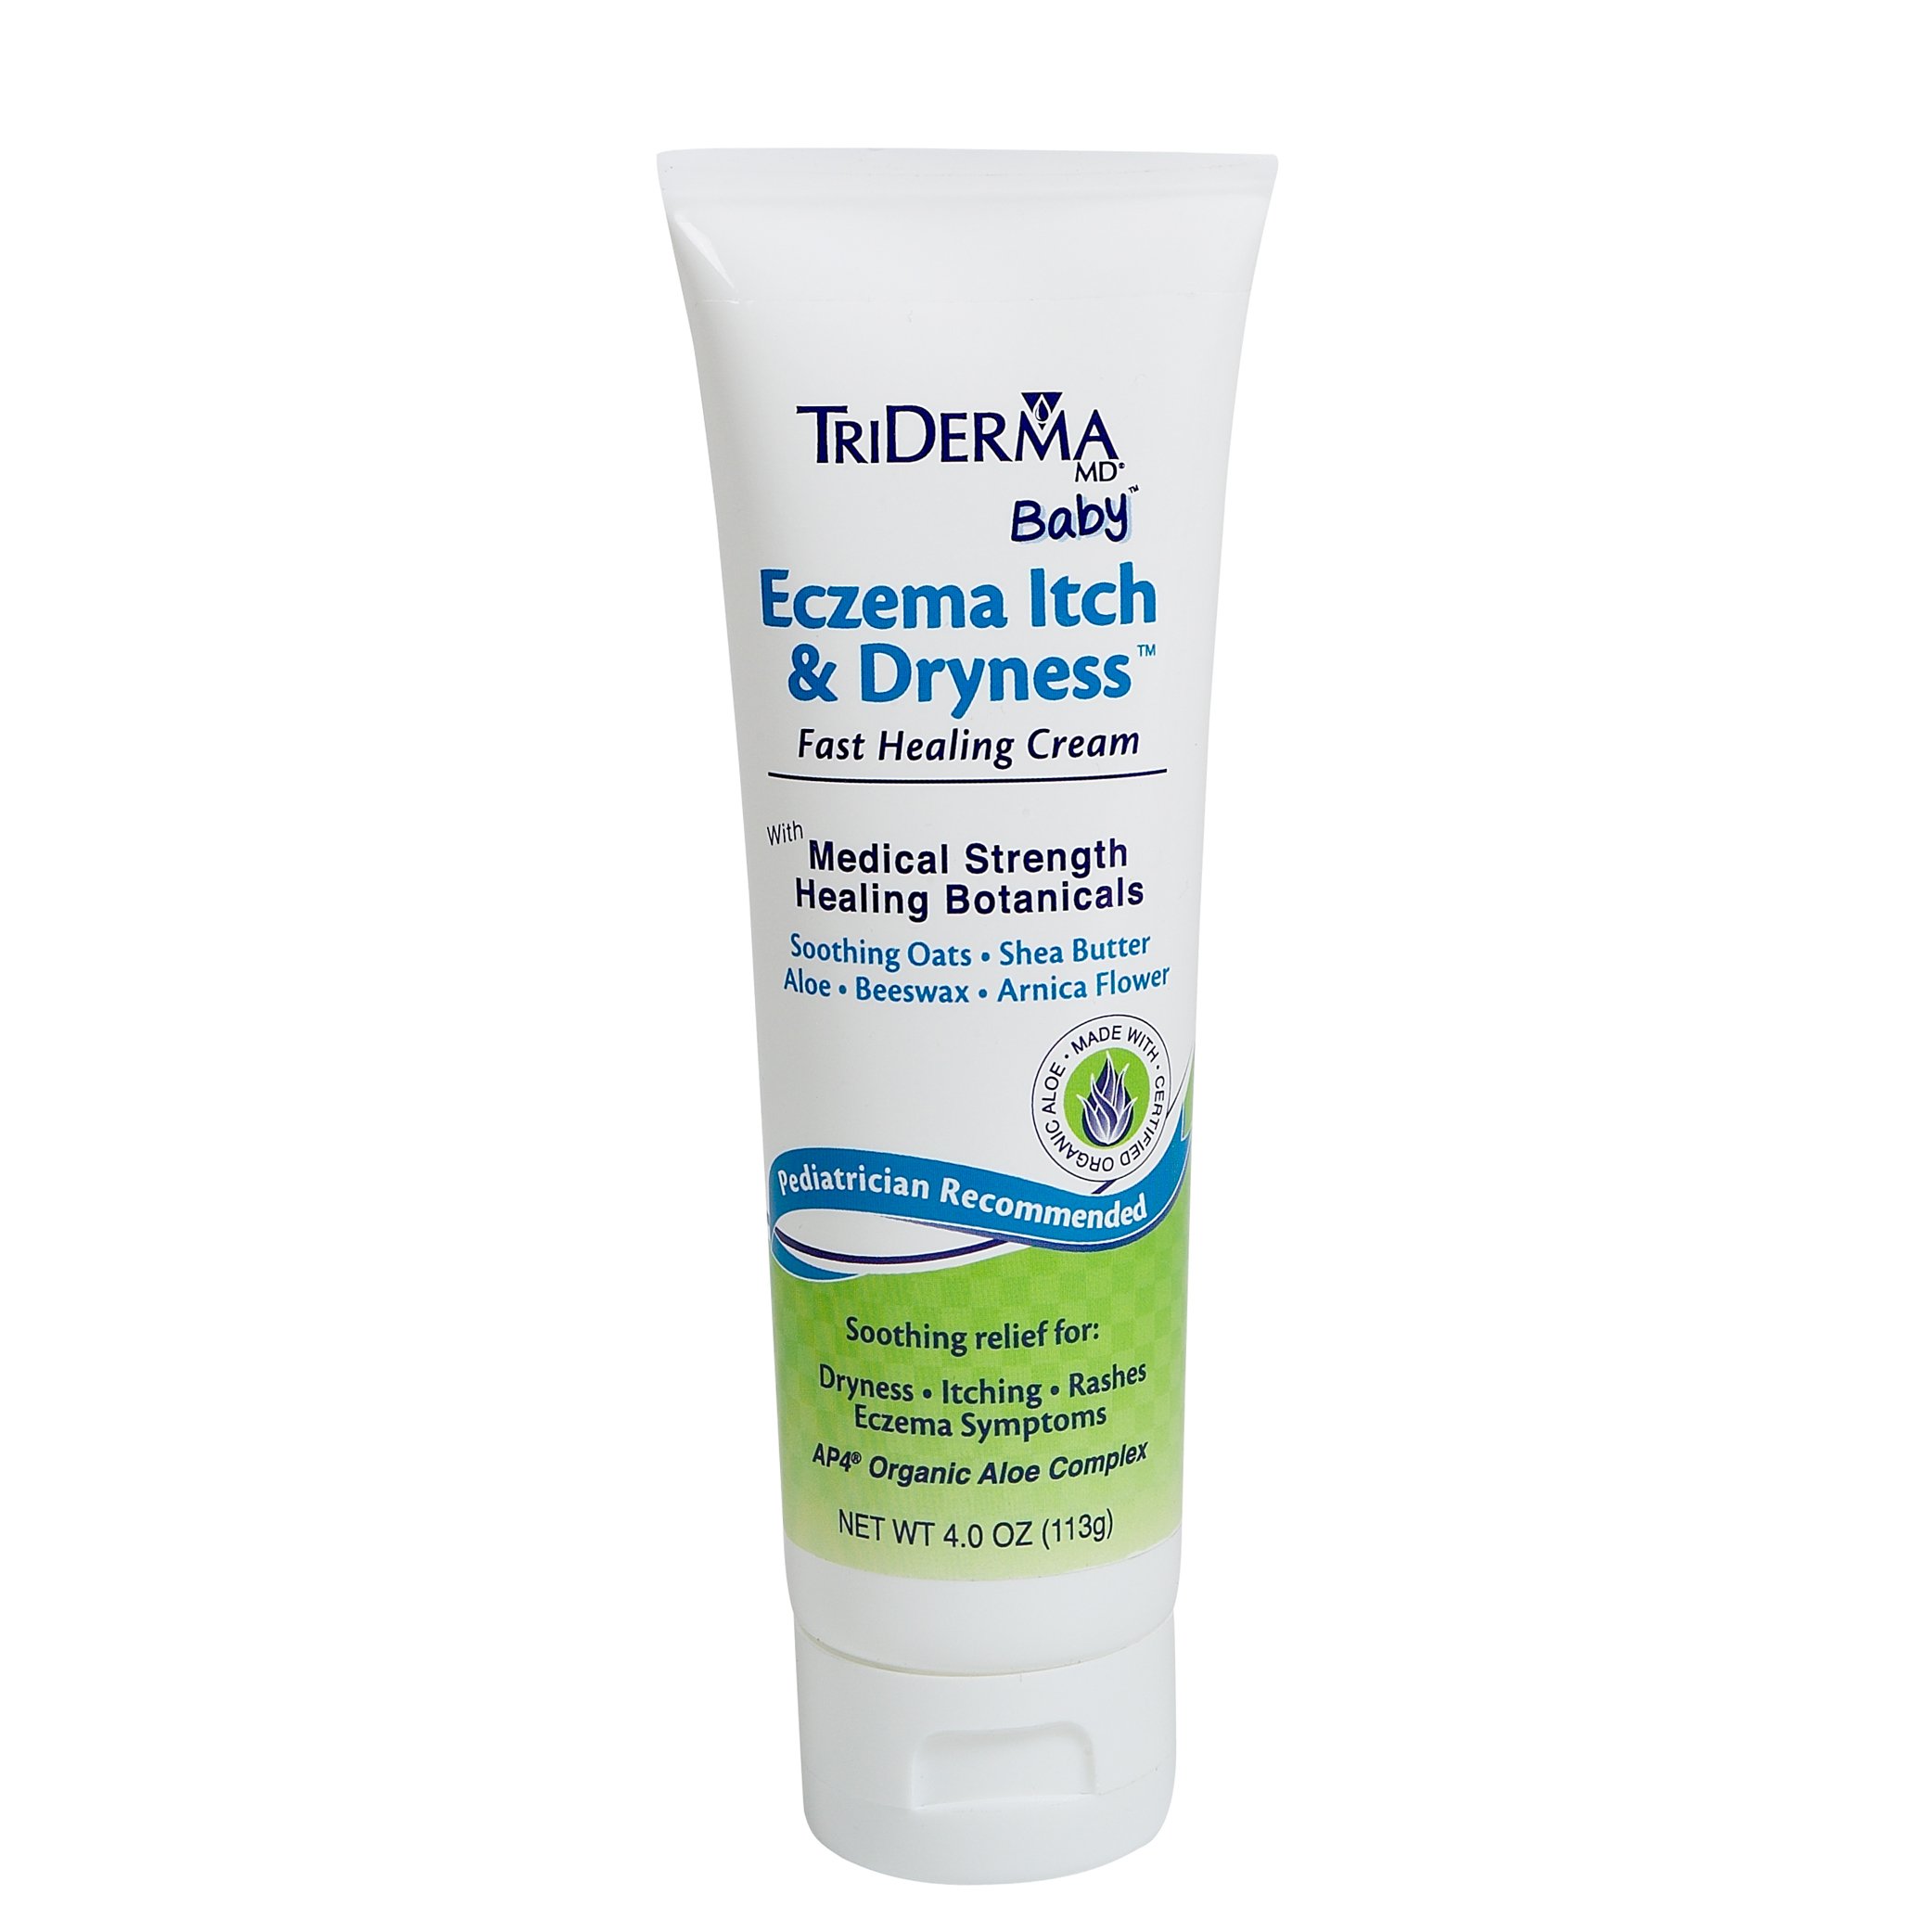 TriDerma Eczema Itch Dryness Fast Healing Cream for Babies 4 oz